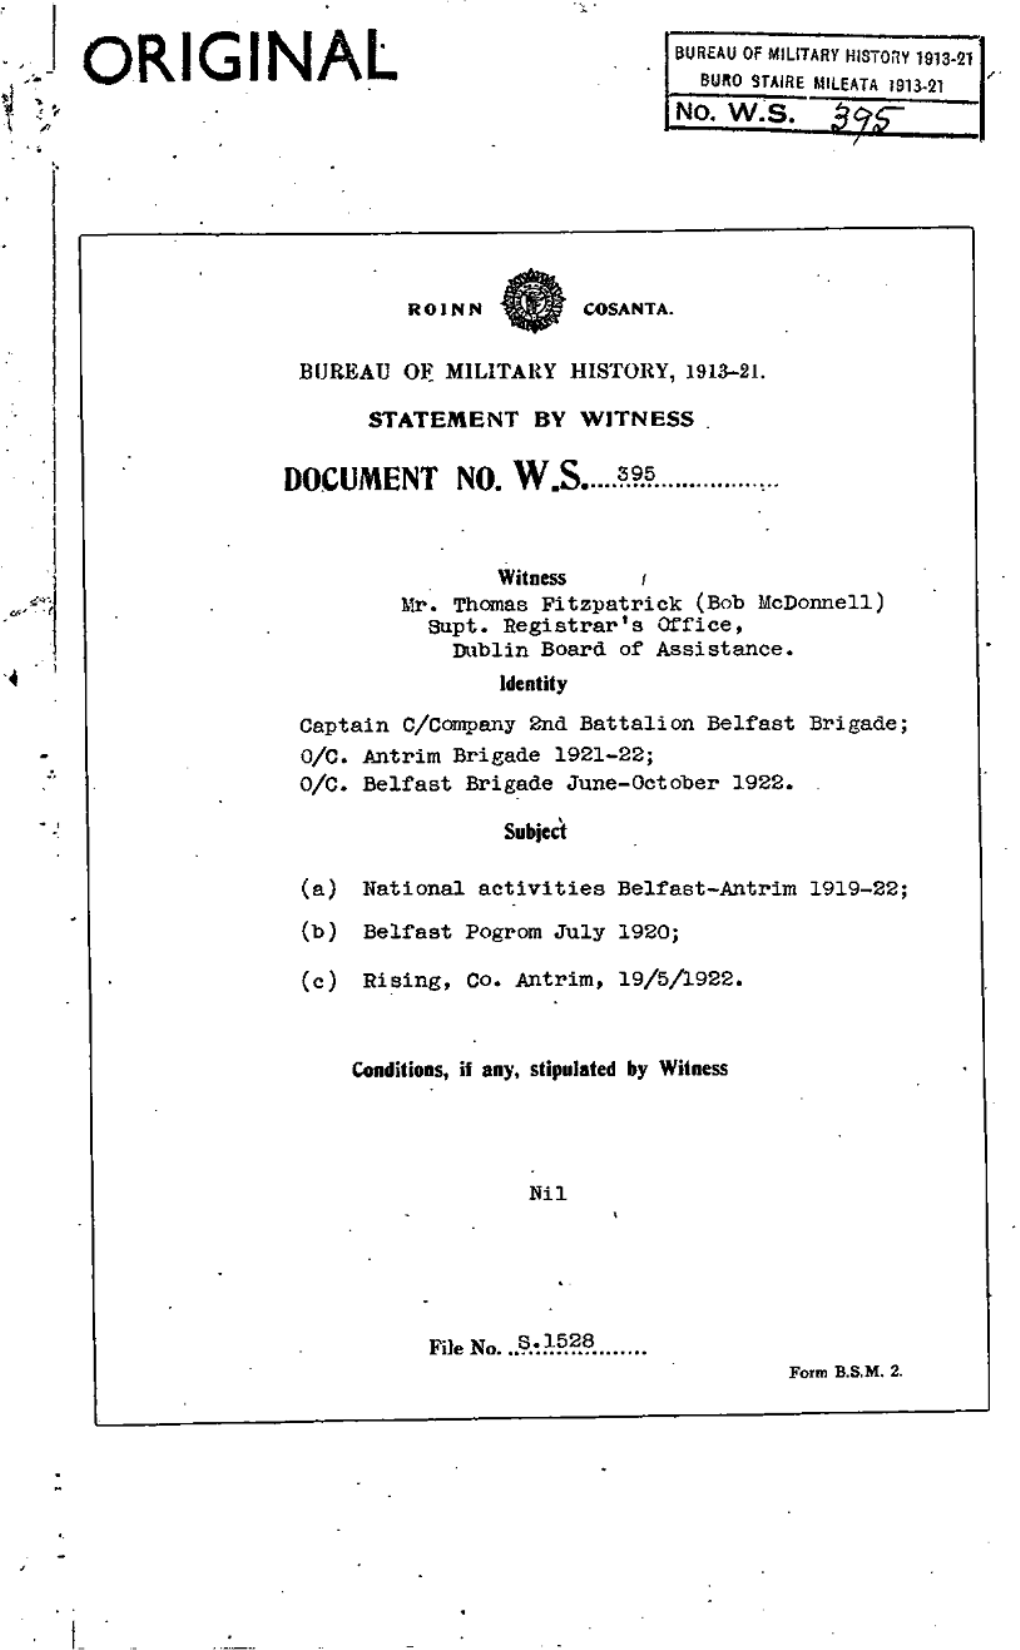 ROINN COSANTA. BUREAU of MILITARY HISTORY, 1913-21. STATEMENT by WITNESS DOCUMENT NO. WS 395 Witness Mr. Thomas Fitzpatrick